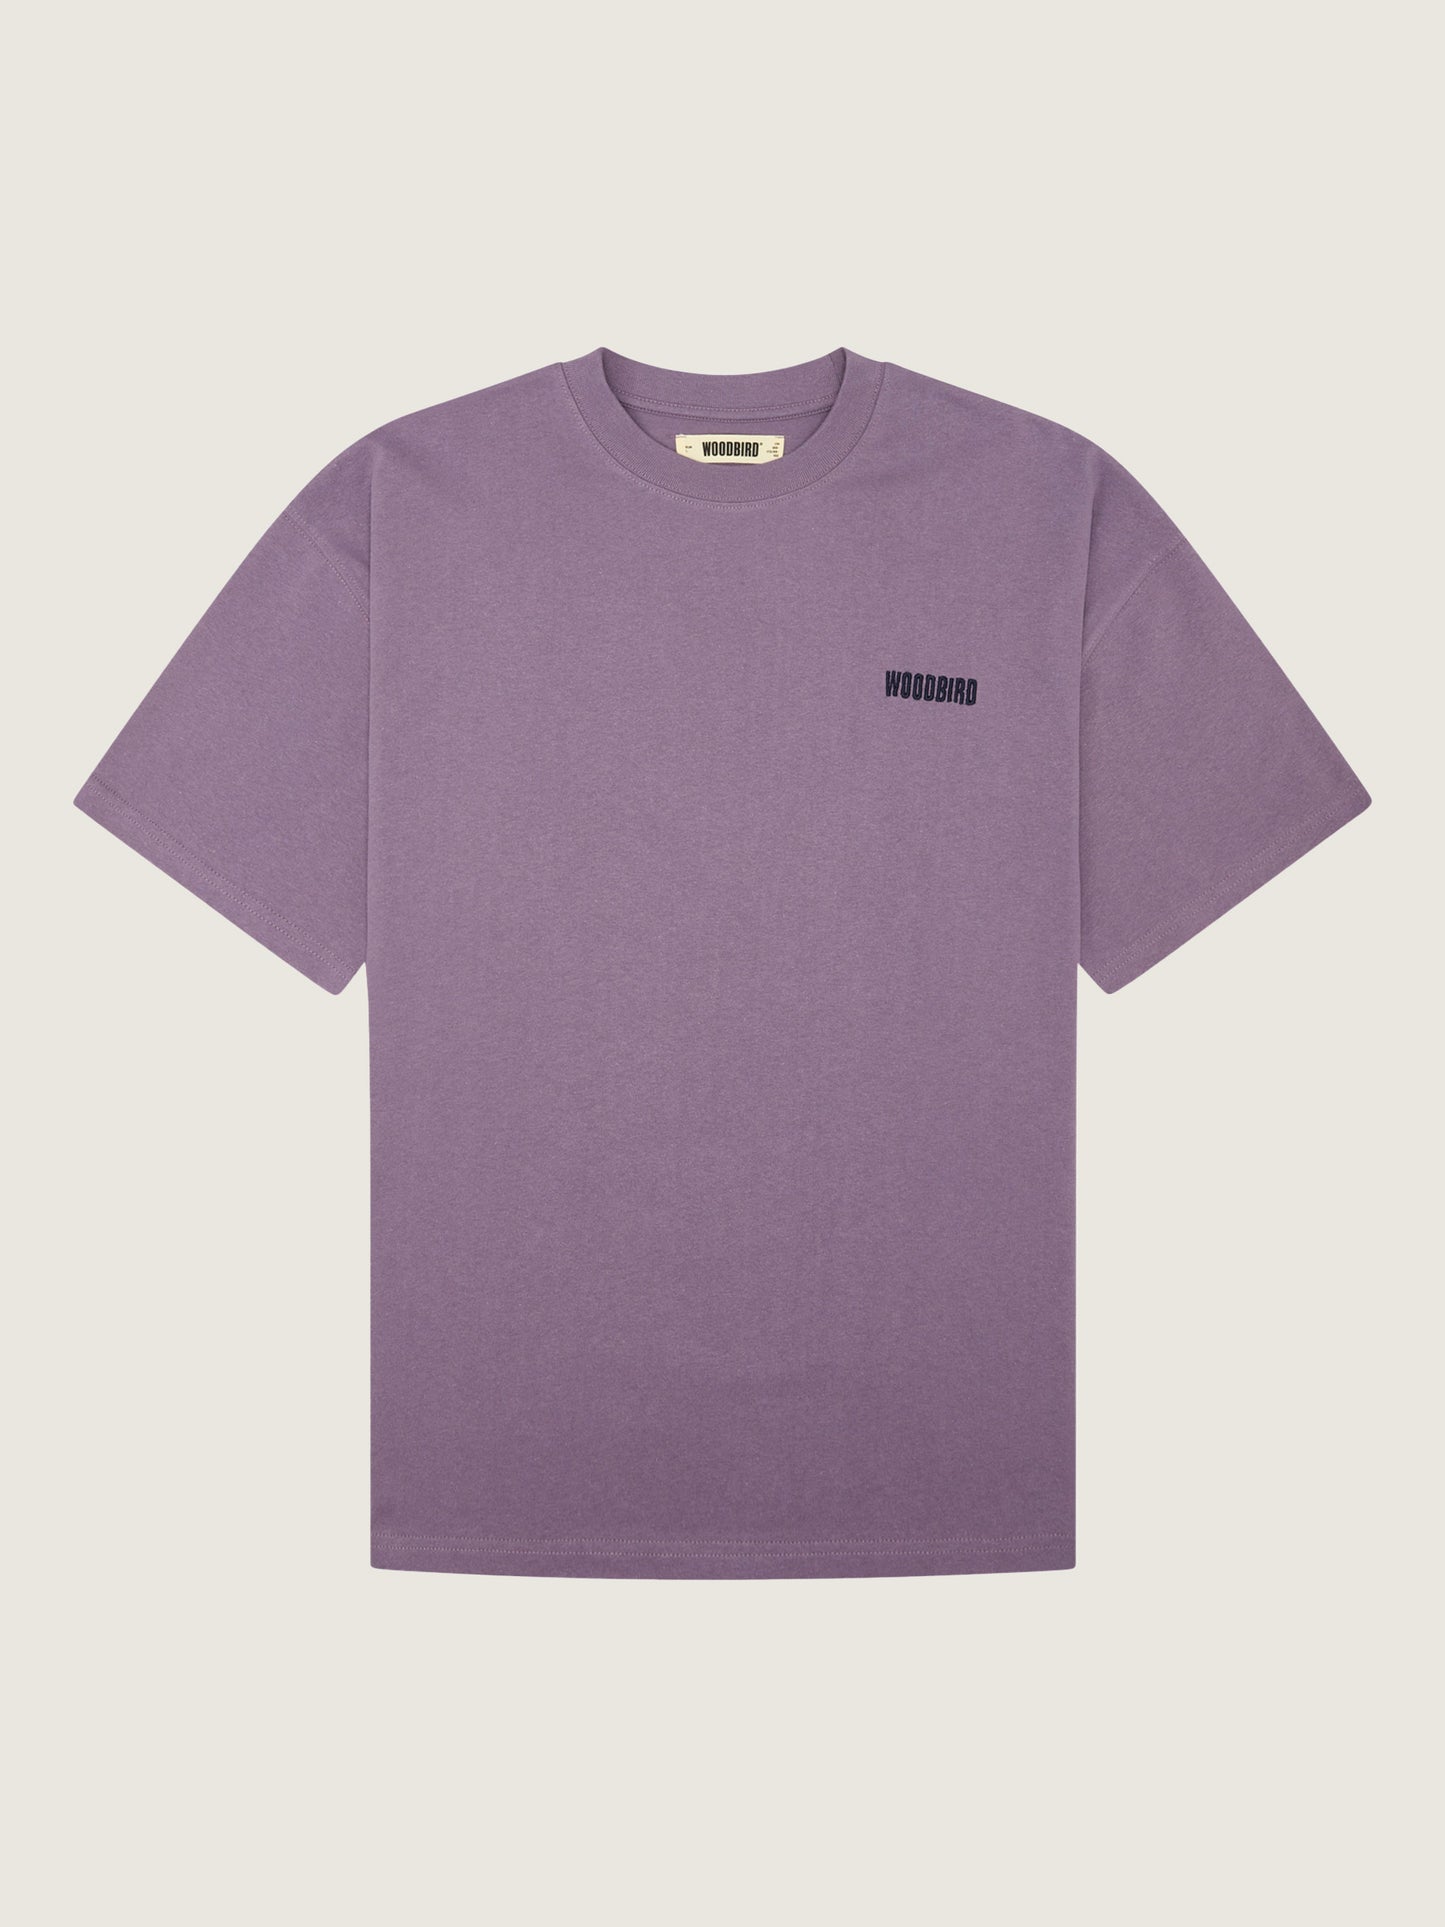 Woodbird Baine Durian Tee T-Shirts Purple